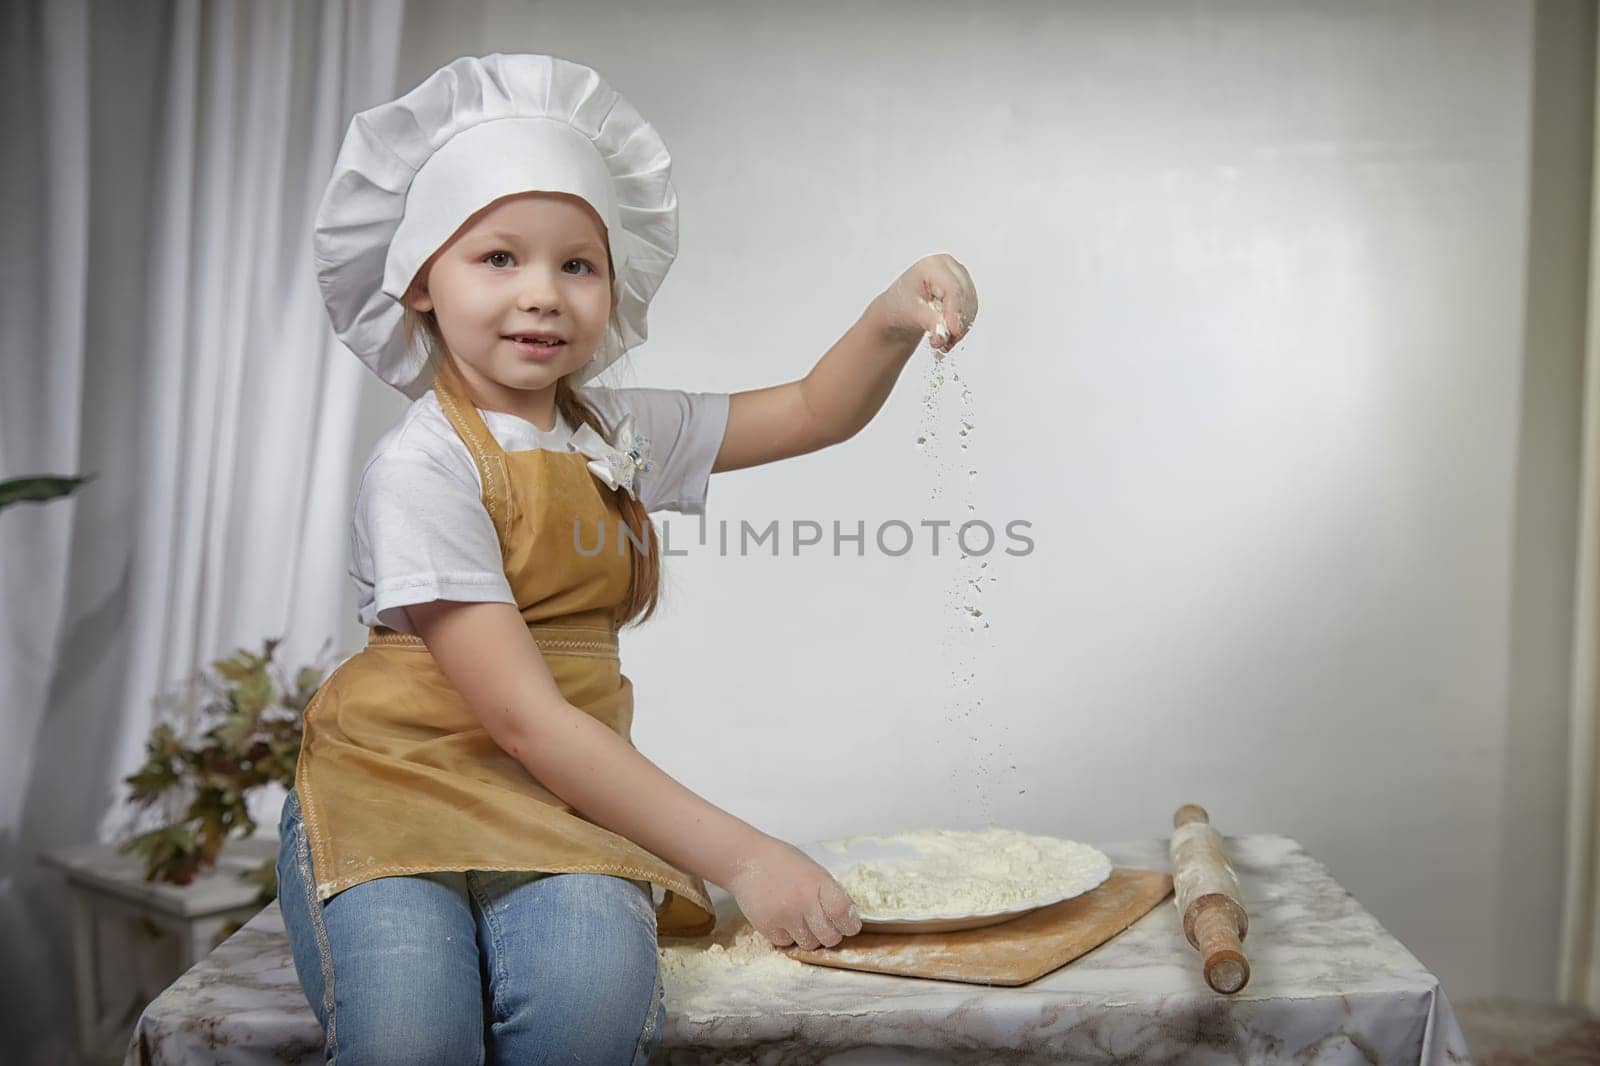 Cute oriental girl cooking in the kitchen on Ramadan, Kurban-Bairam, Eid al-Adha. Funny female child at cook photo shoot. Pancakes, Maslenitsa, Easter